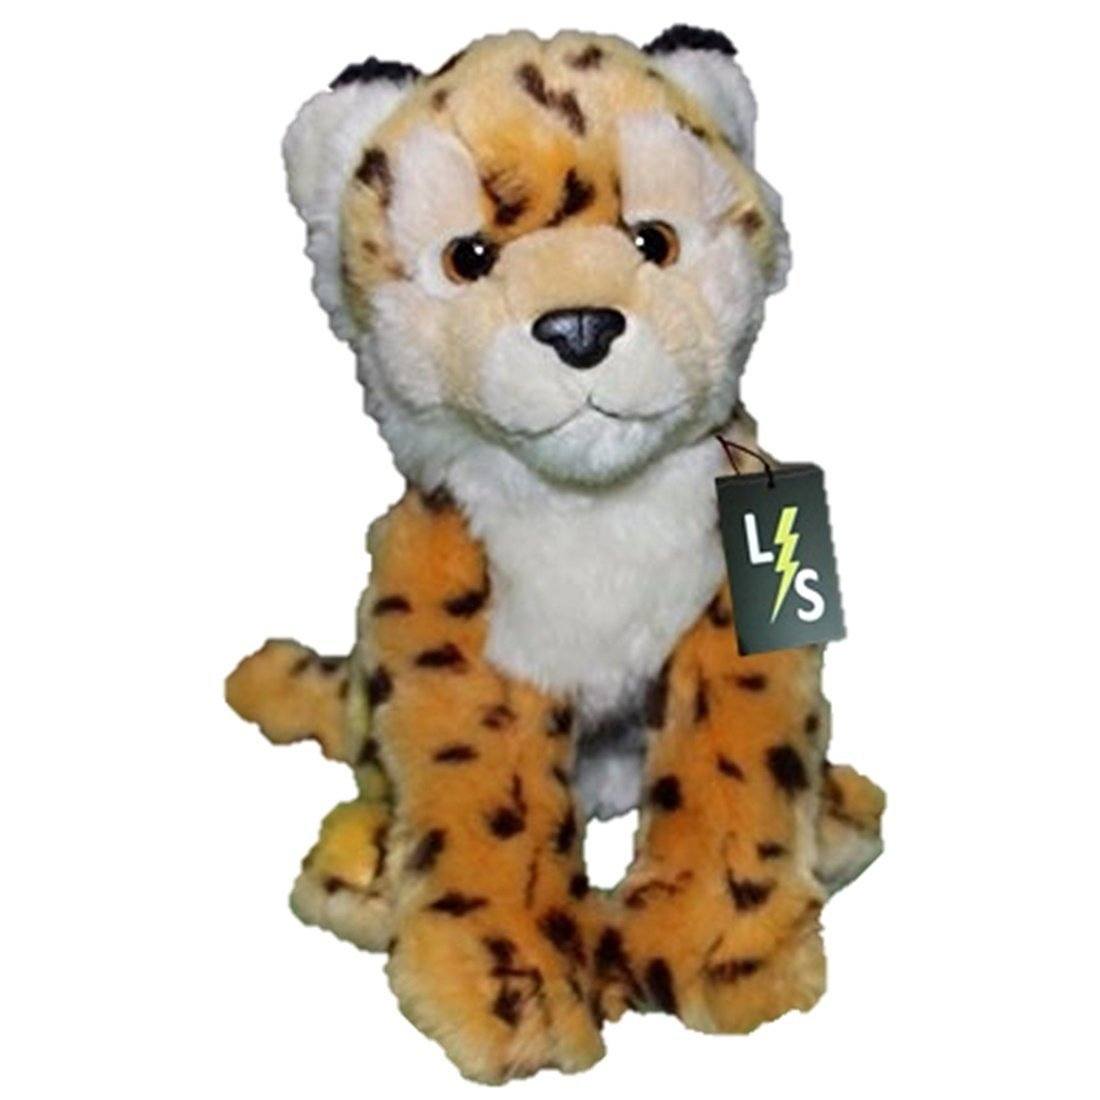 realistic cheetah stuffed animal